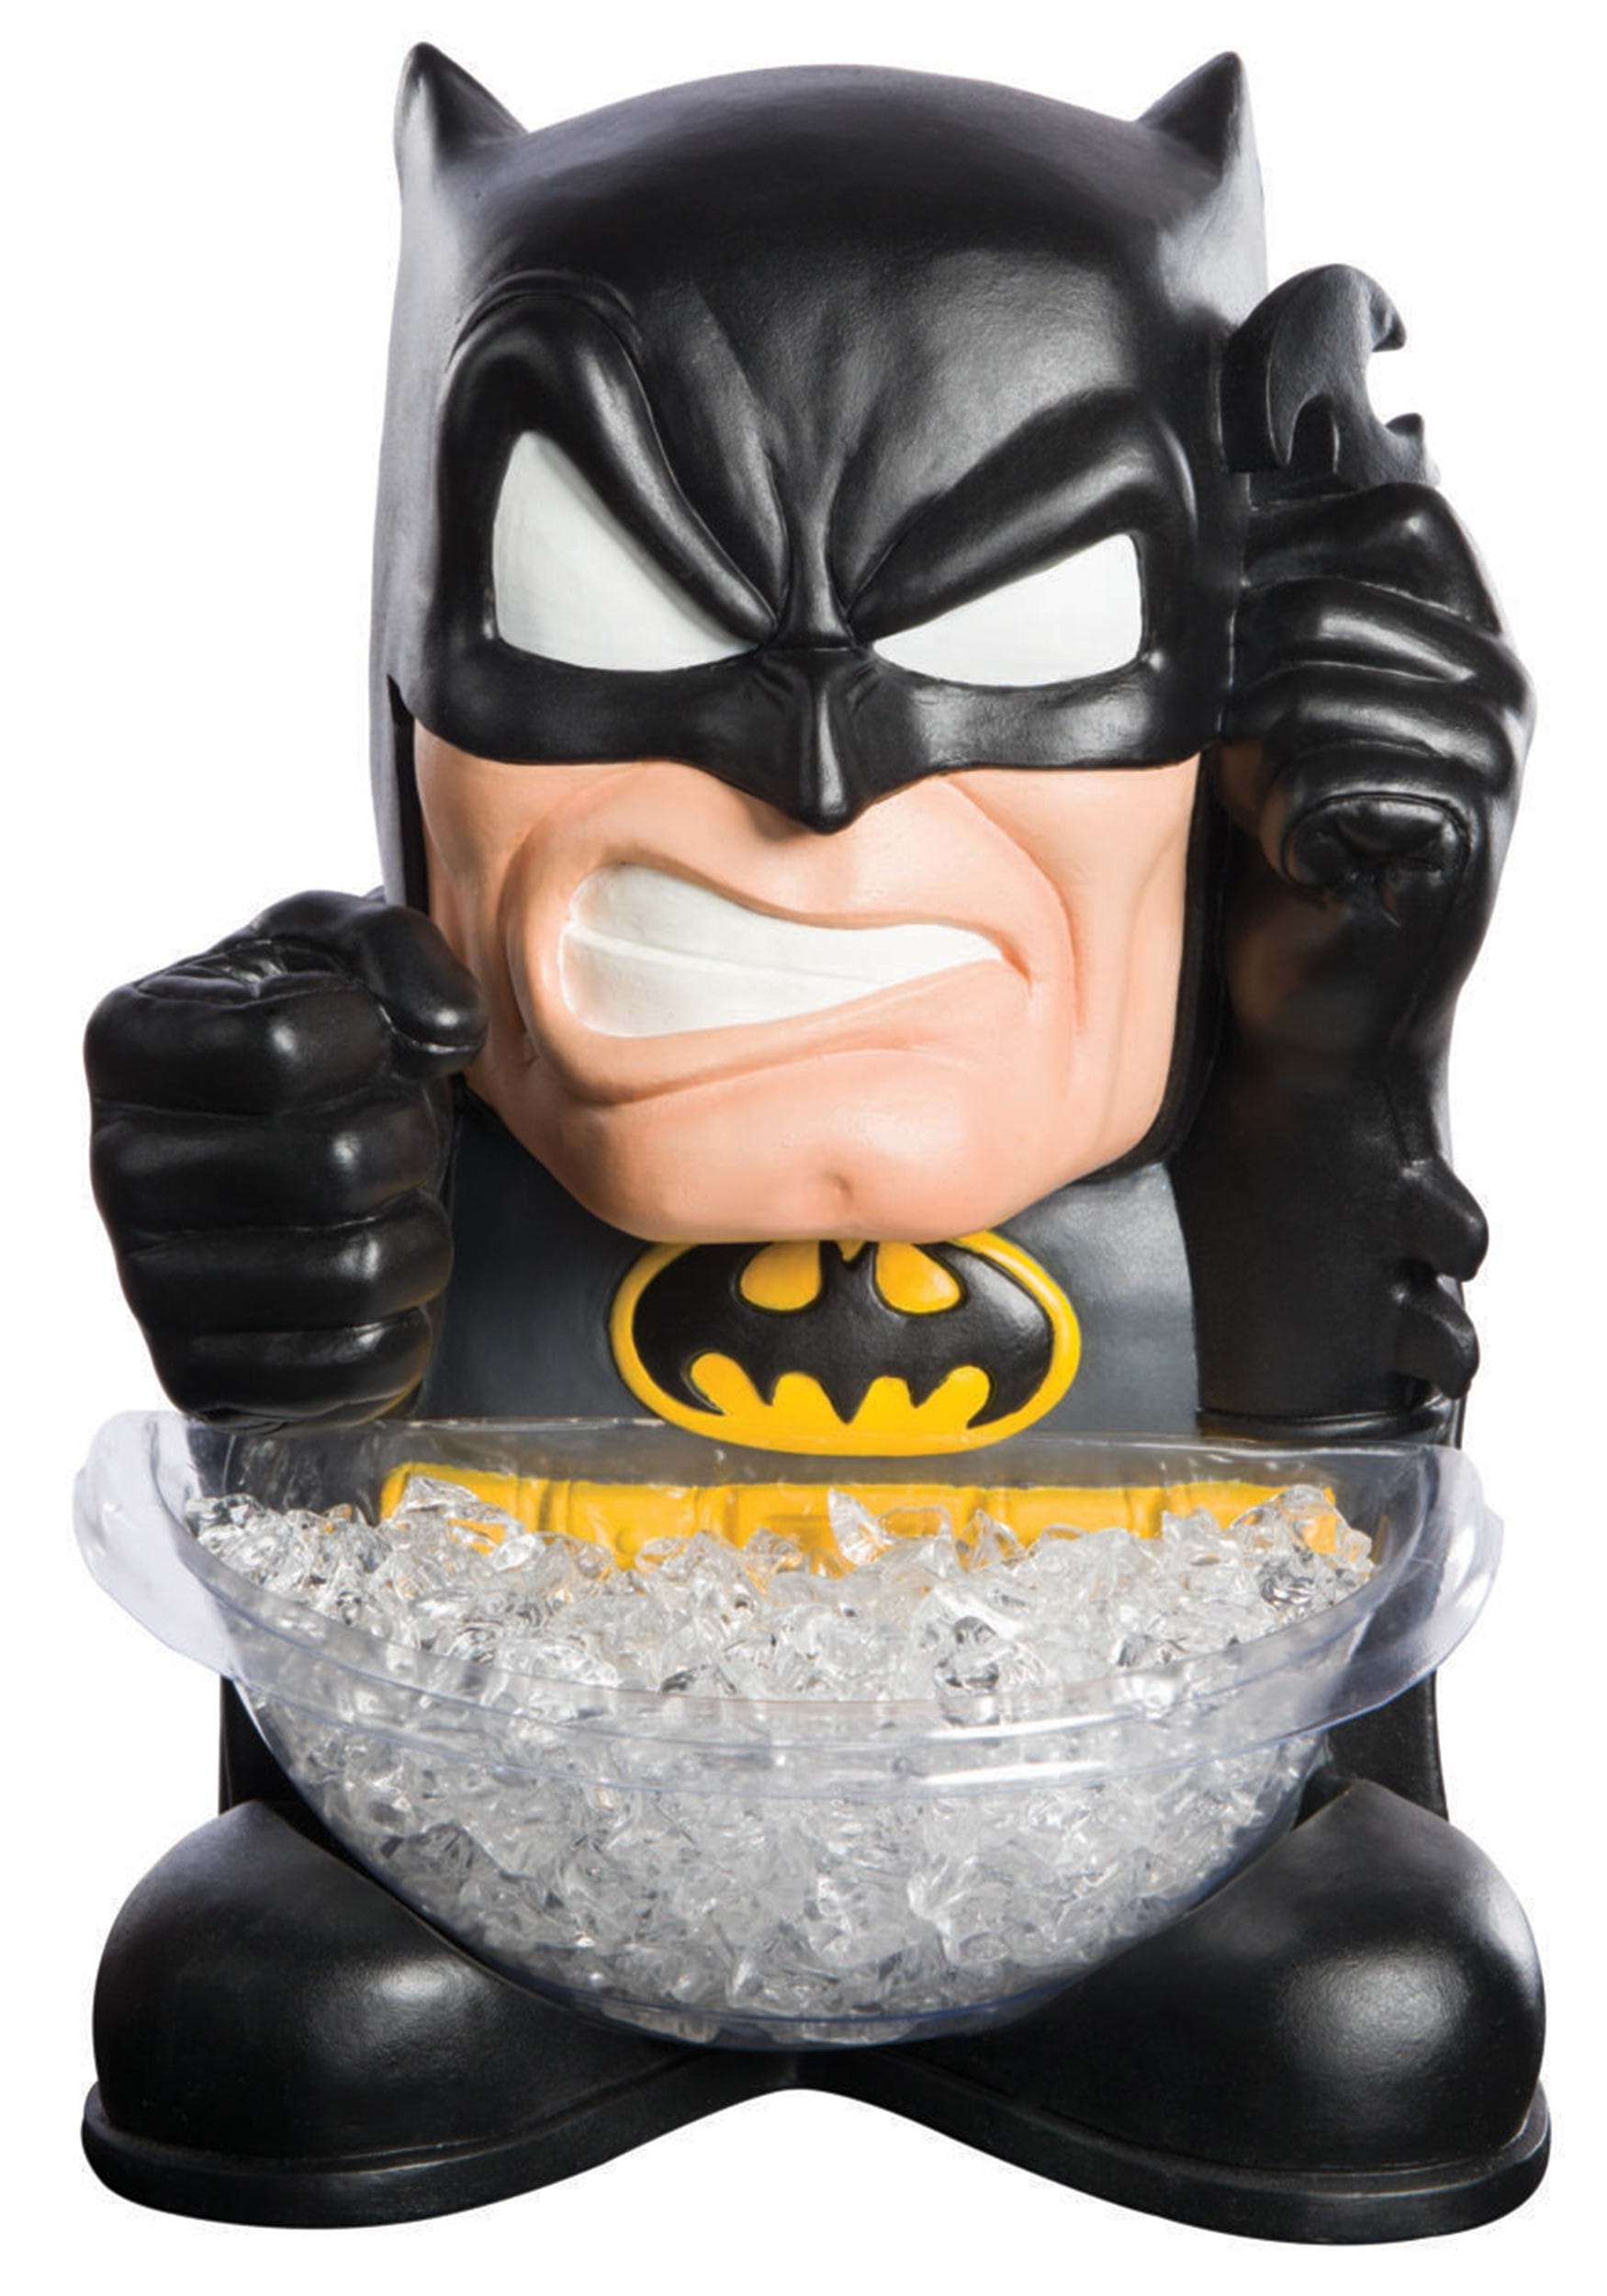 Batman Candy Bowl Holder Halloween Decoration , Batman Decorations